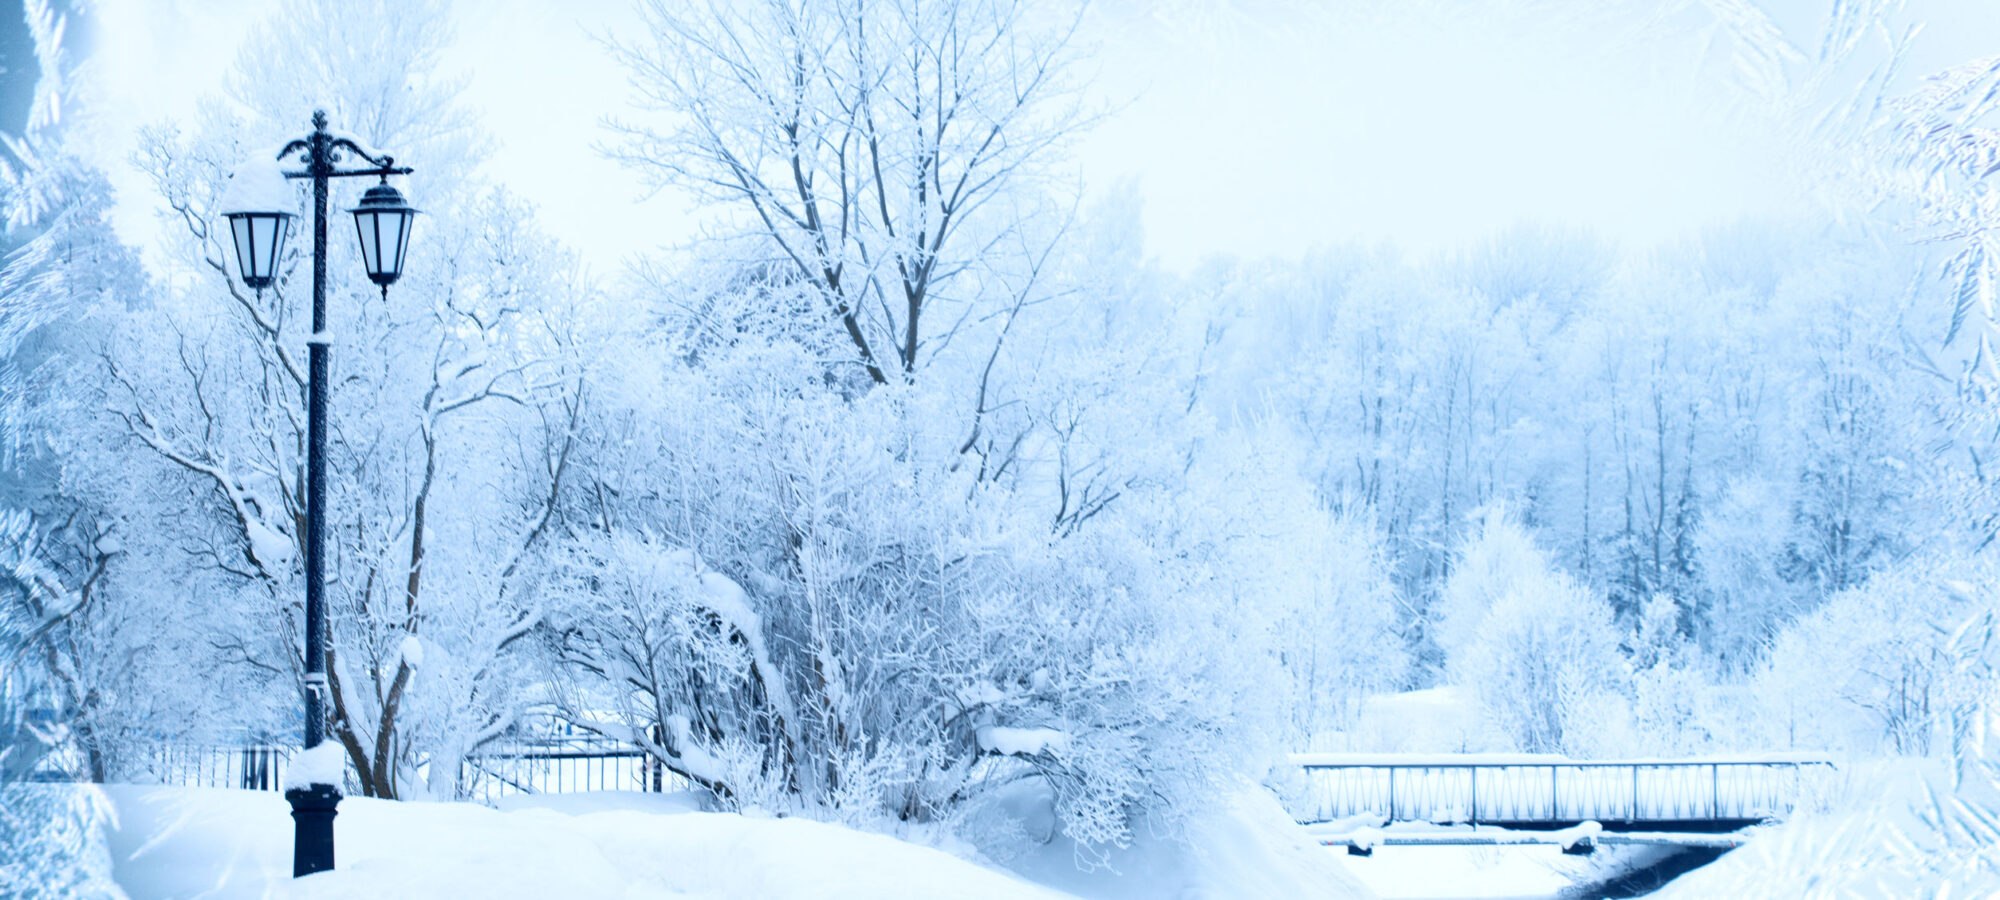 47810224 - winter background, landscape. winter trees in wonderland. winter scene. christmas, new year background